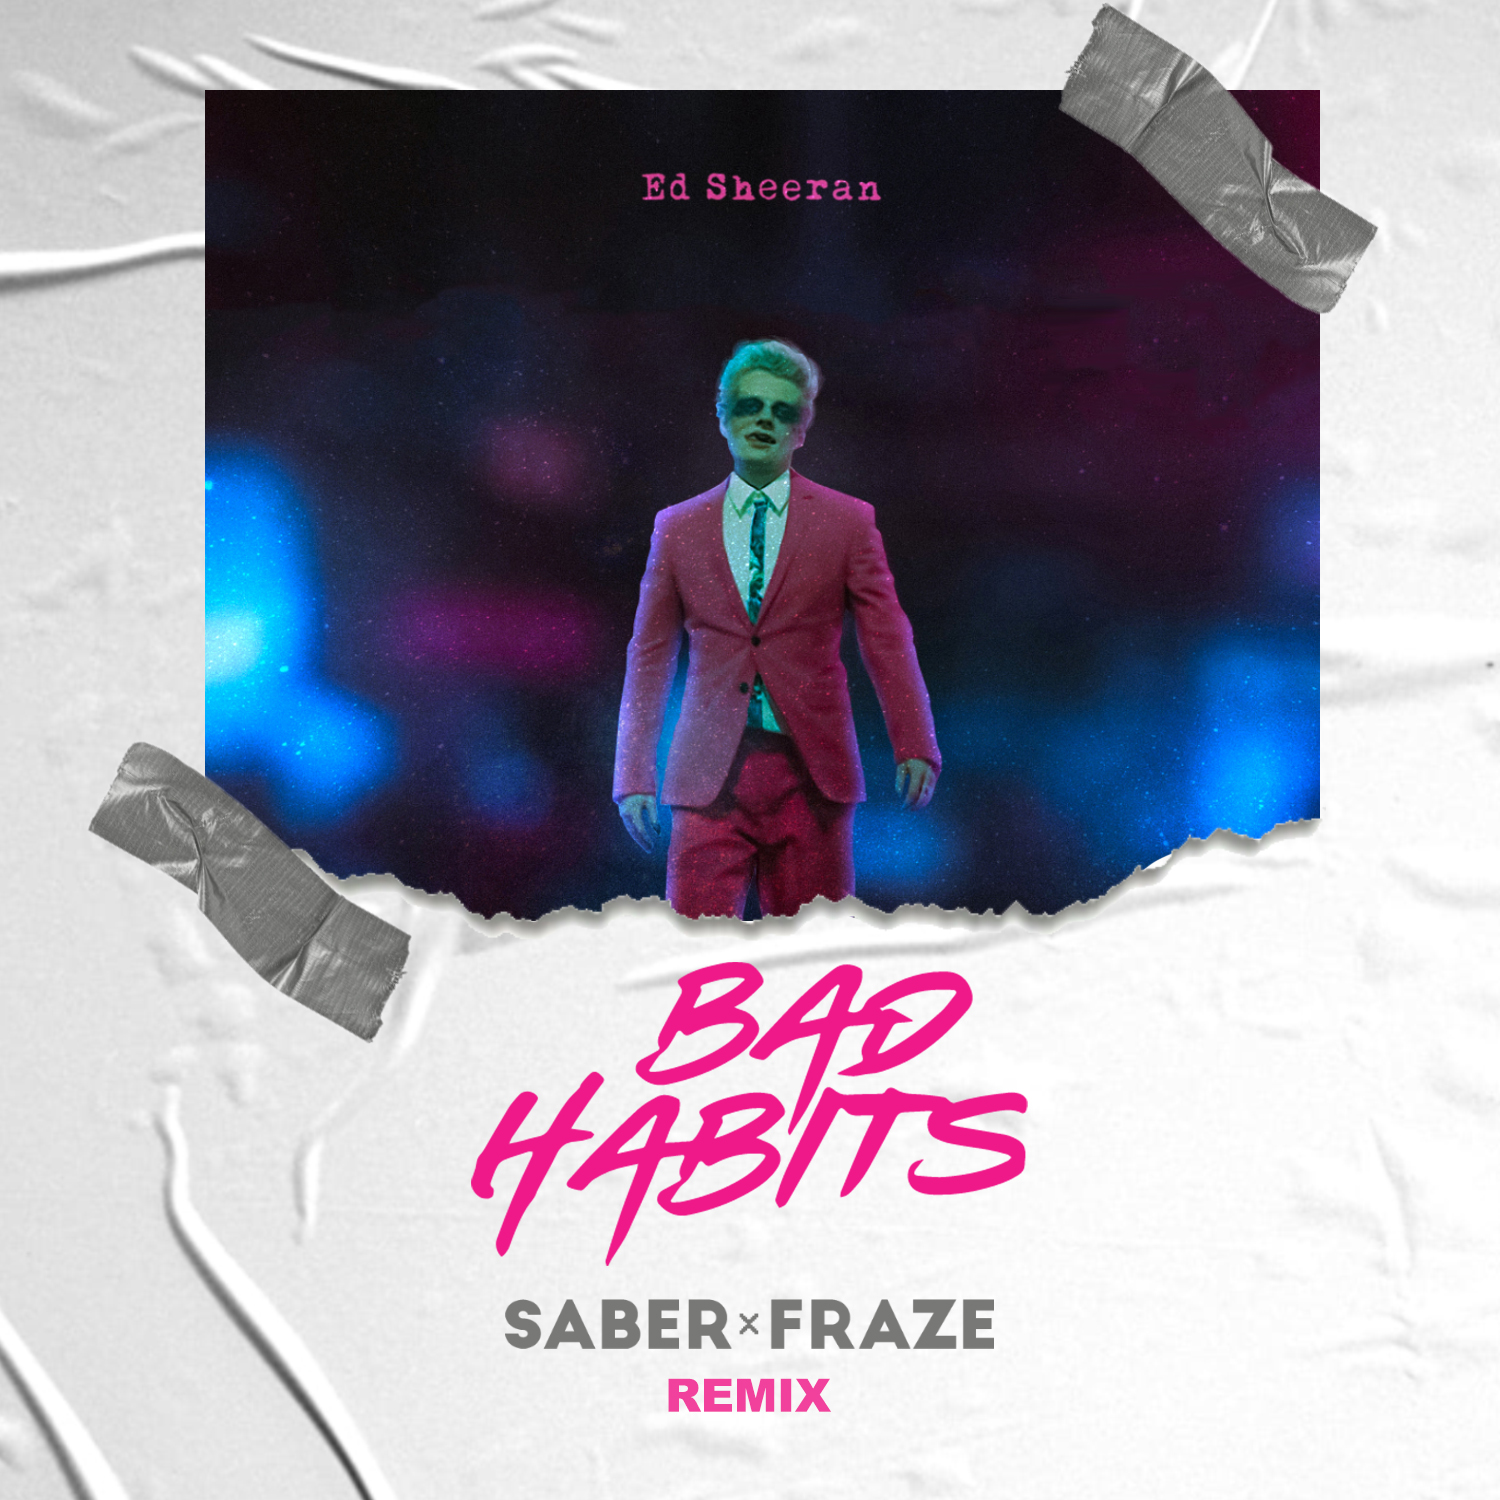 Ed Sheeran - Bad Habits (SABER & FRAZE Remix)